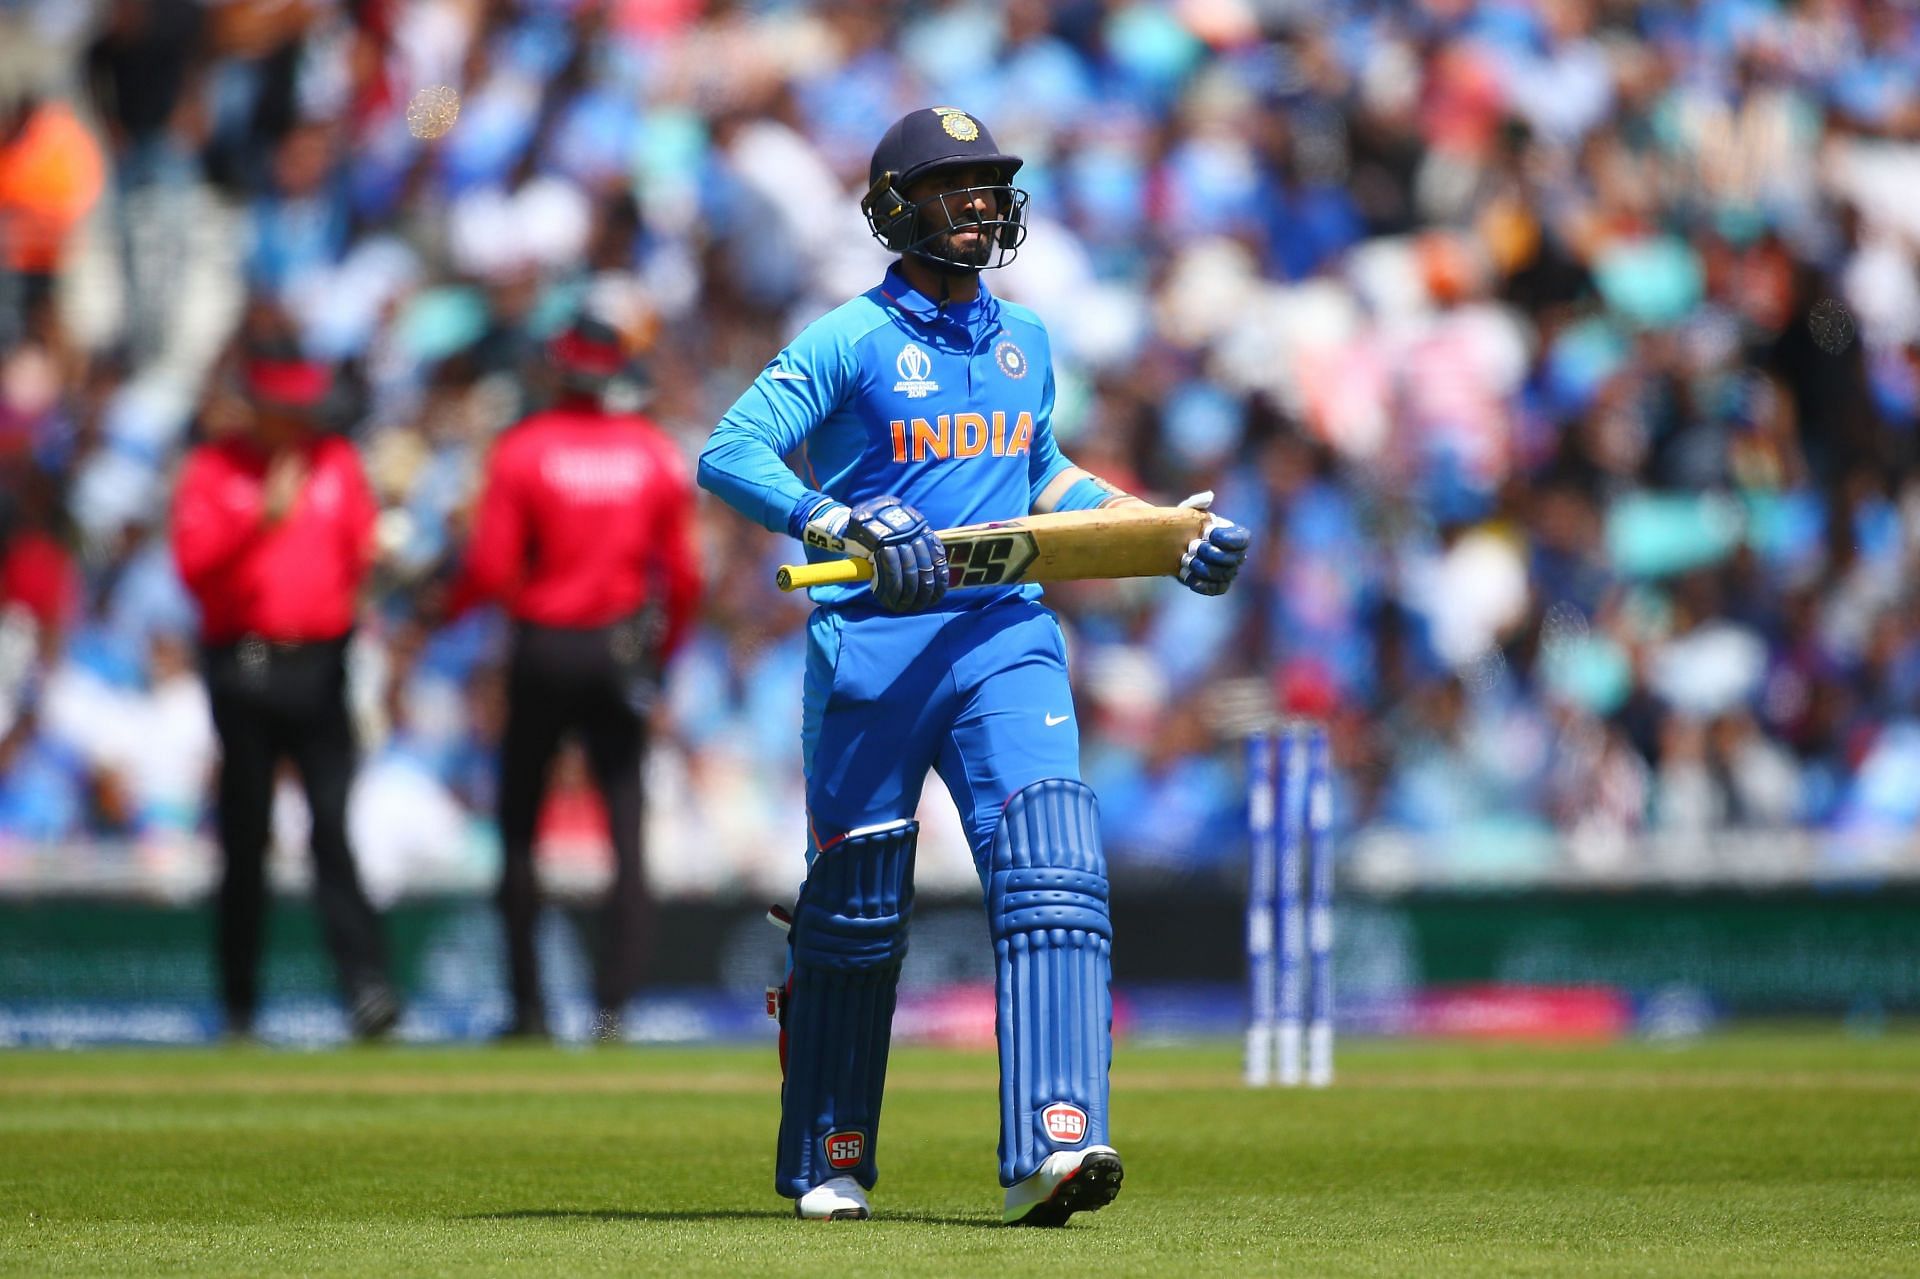 Dinesh Karthik has not played international cricket since 2019